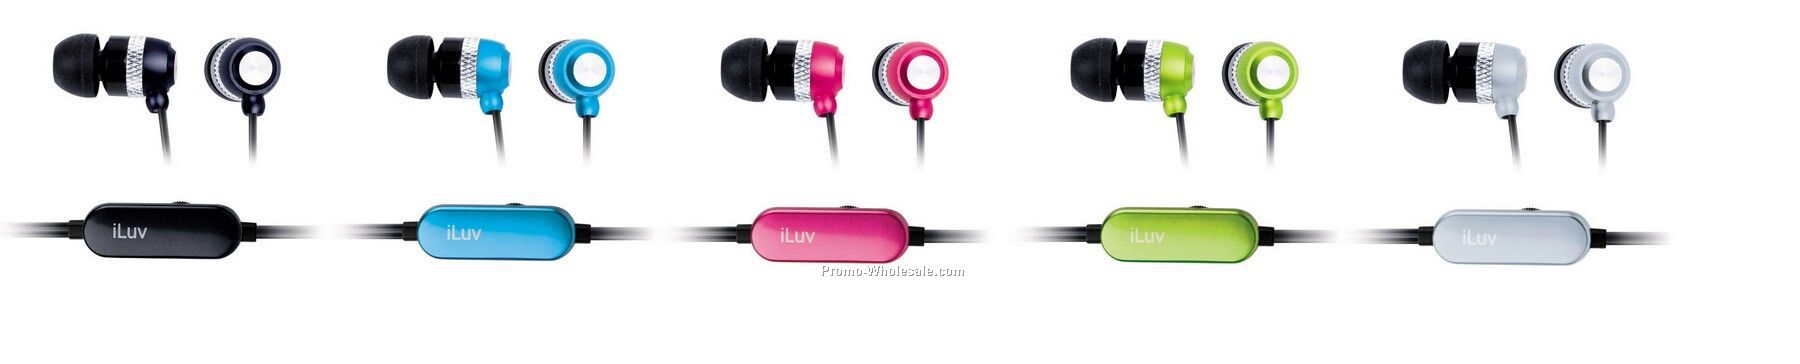 Iluv Aluminum In-ear Stereo Earphones W/ Volume Control - Pink